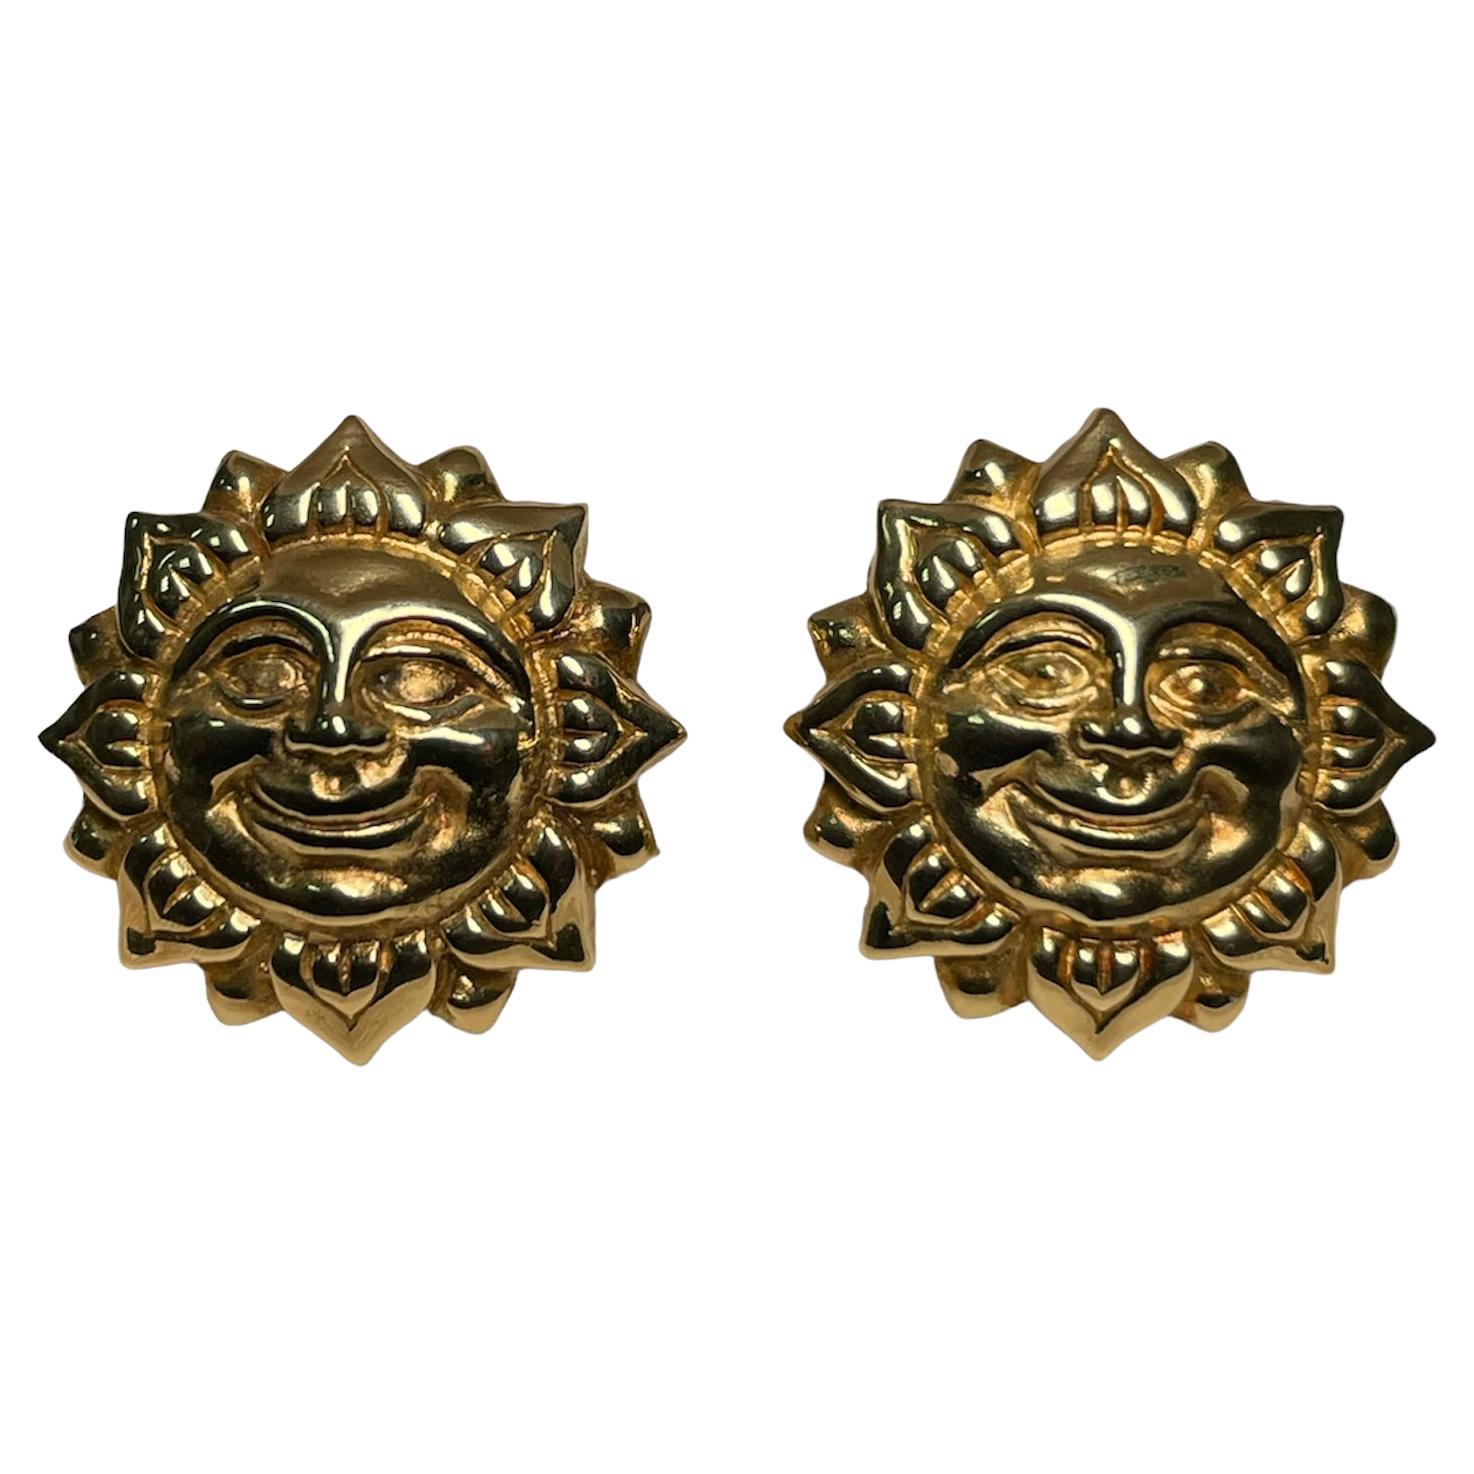 Rare 18k Yellow Gold Pair of Smiling Sun Face Cufflinks